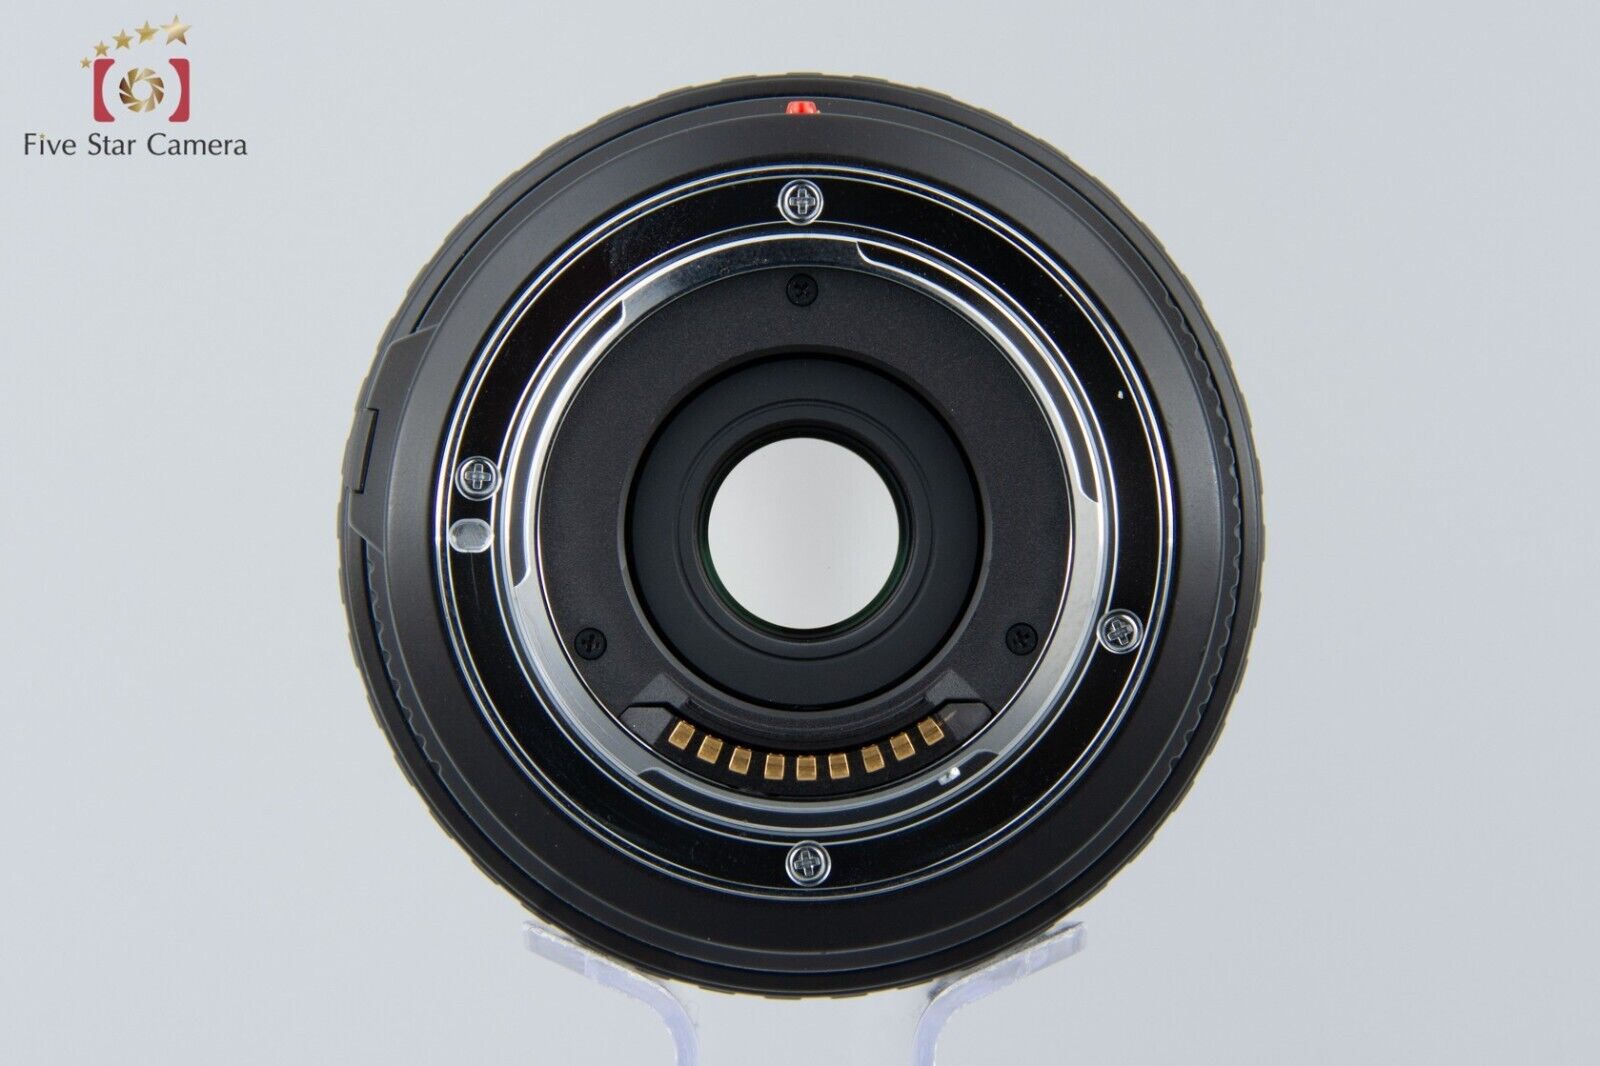 Olympus ZUIKO DIGITAL 18-180mm f/3.5-6.3